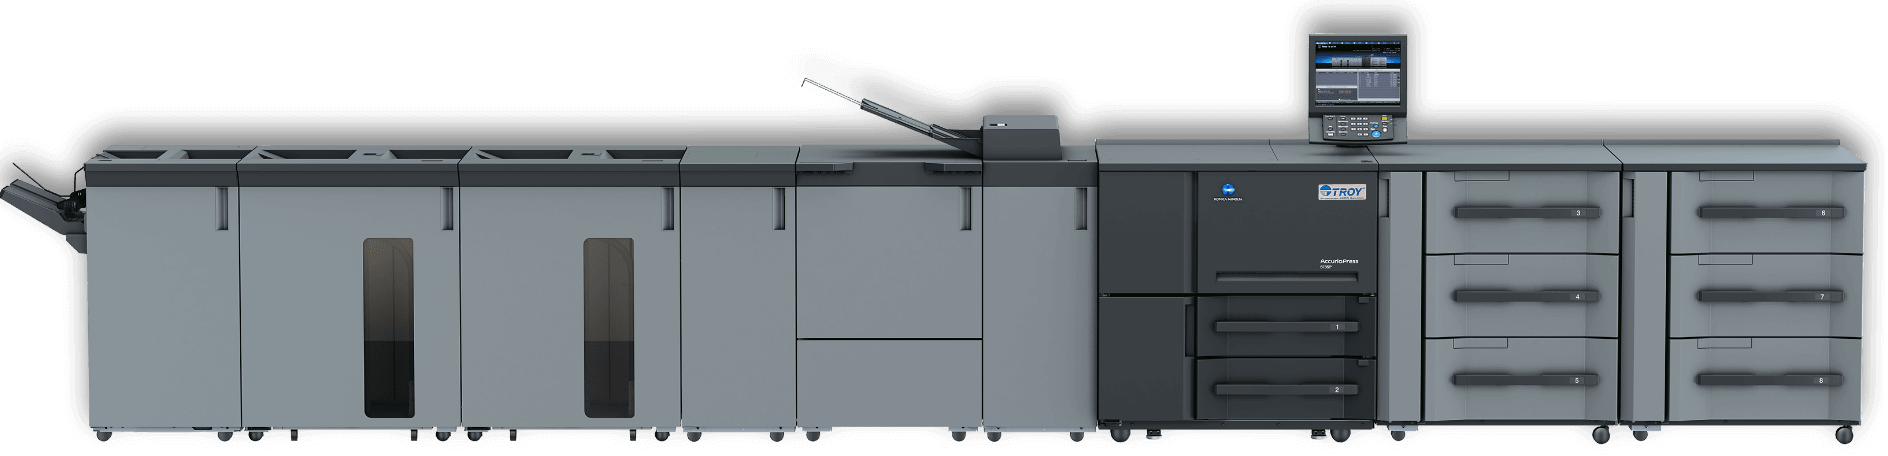 km-6136p-hero-printer-min